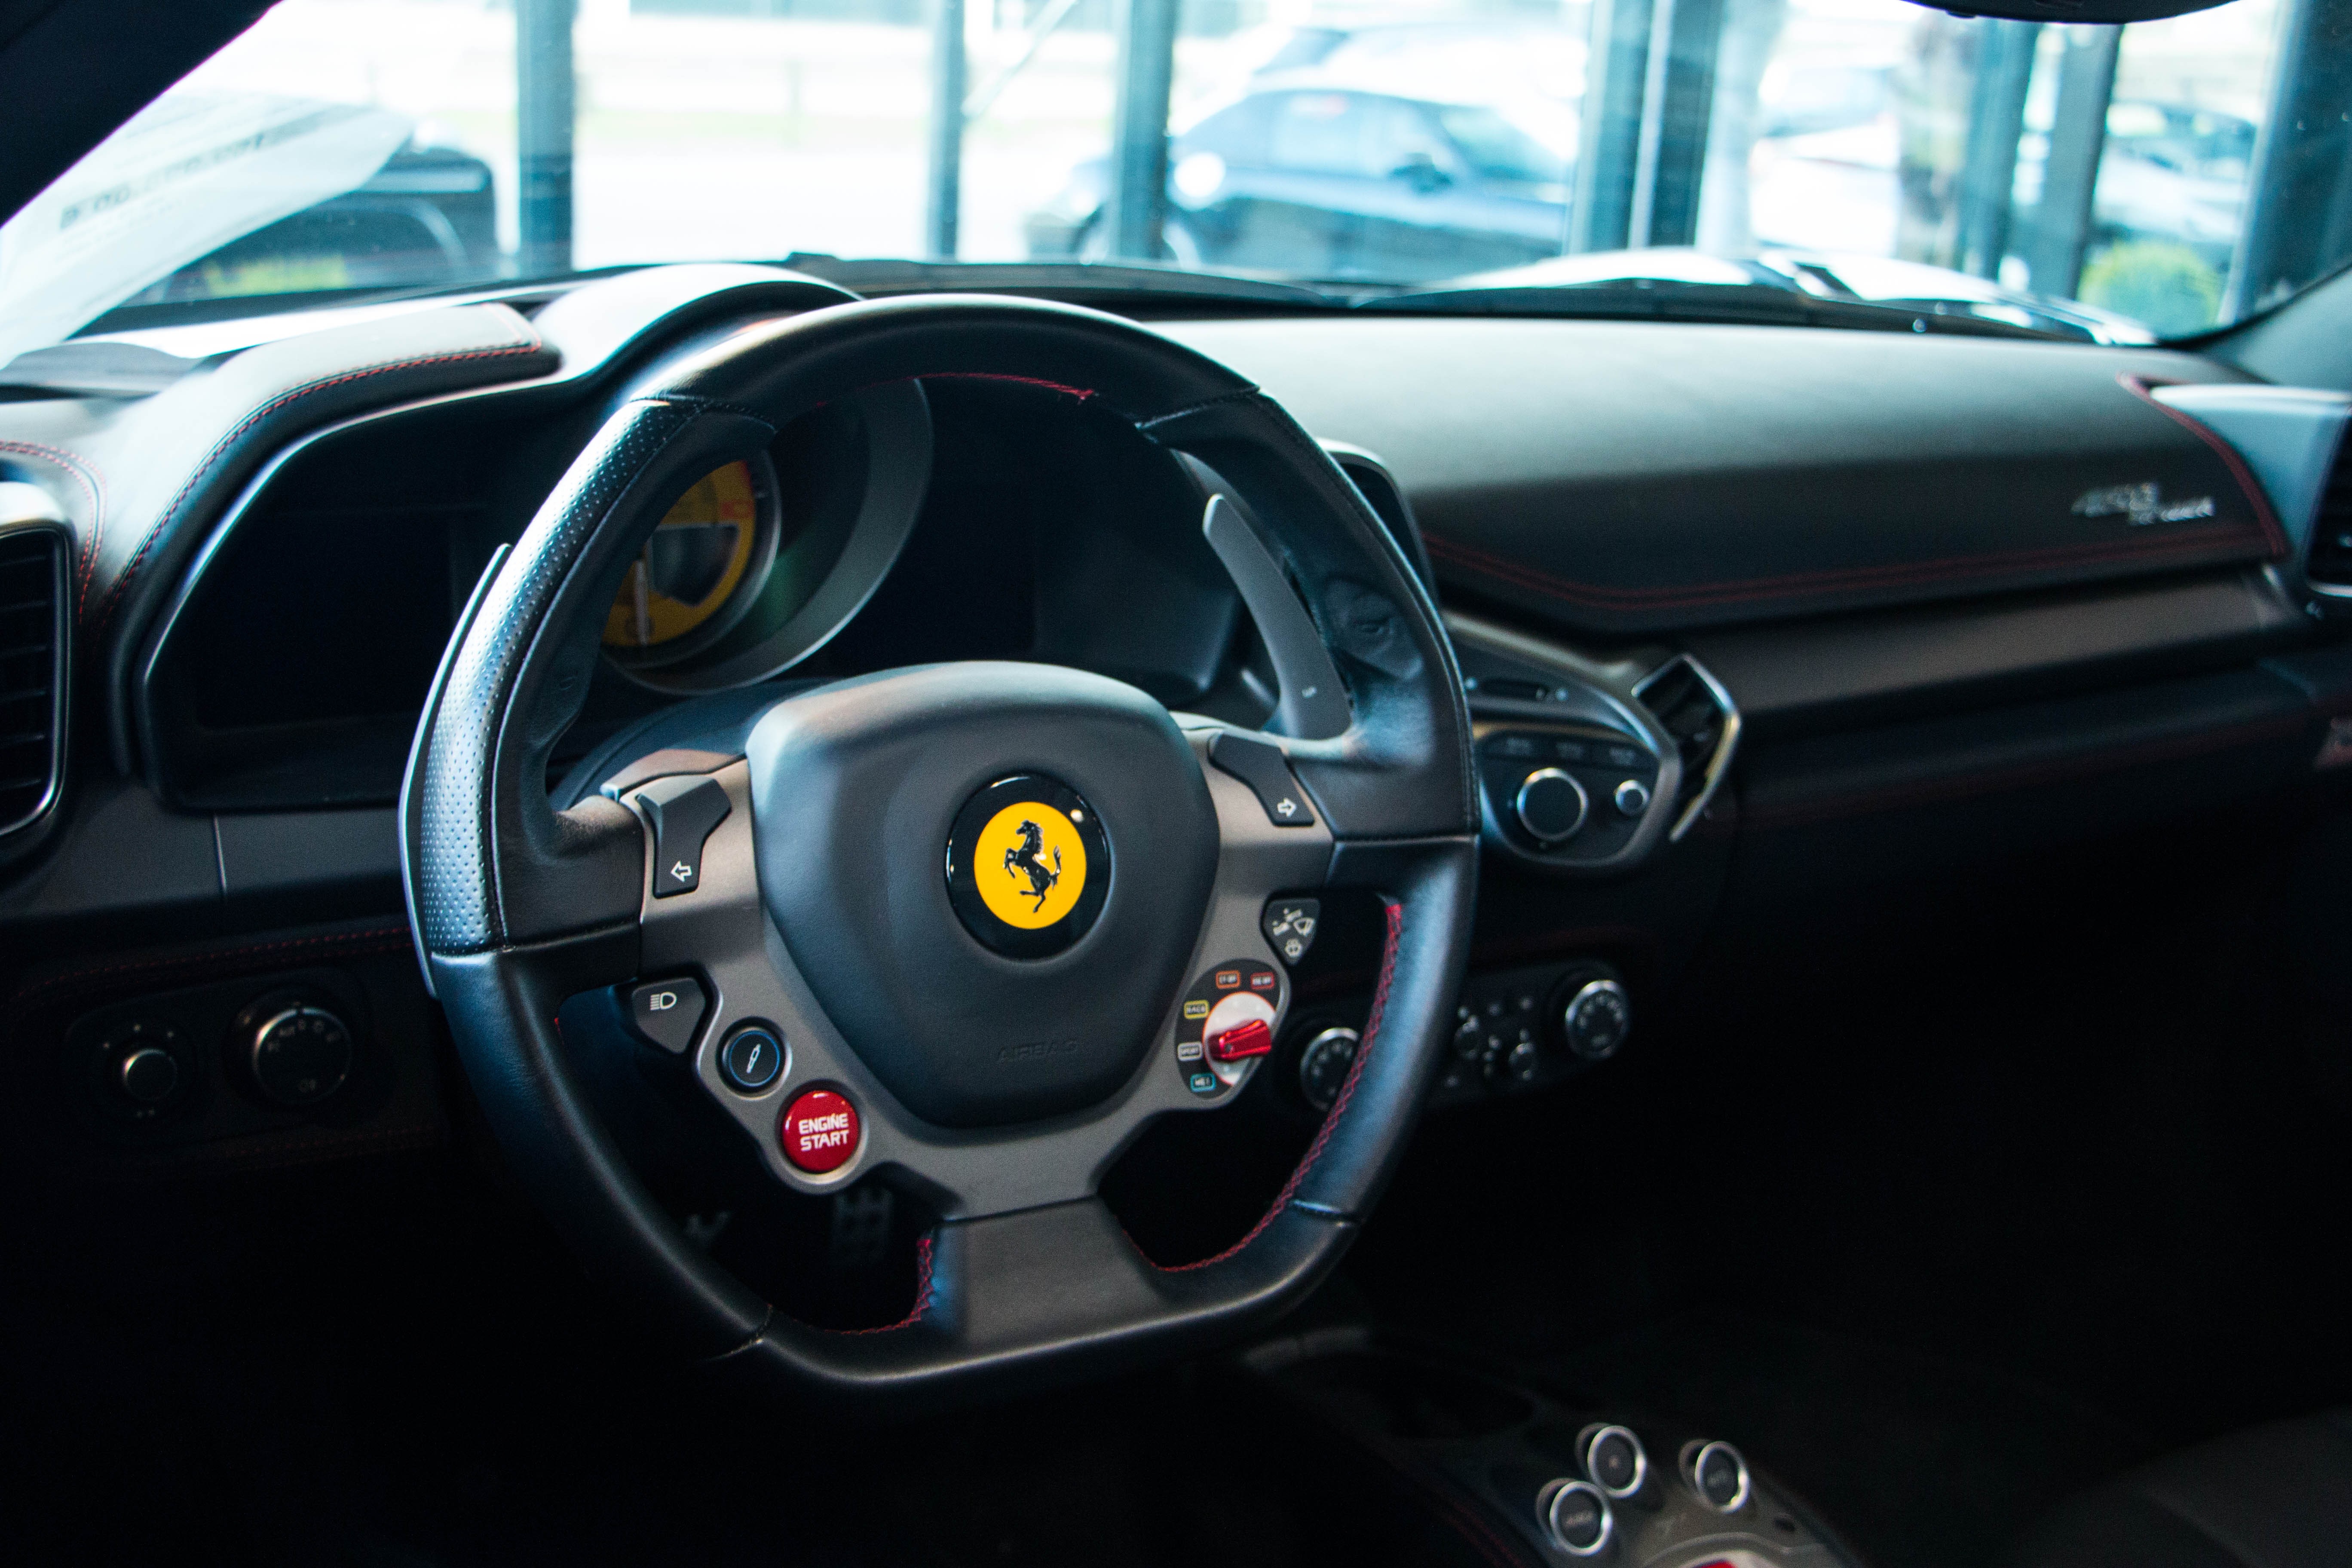 General 5472x3648 car Ferrari car interior Ferrari 458 vehicle steering wheel italian cars Stellantis